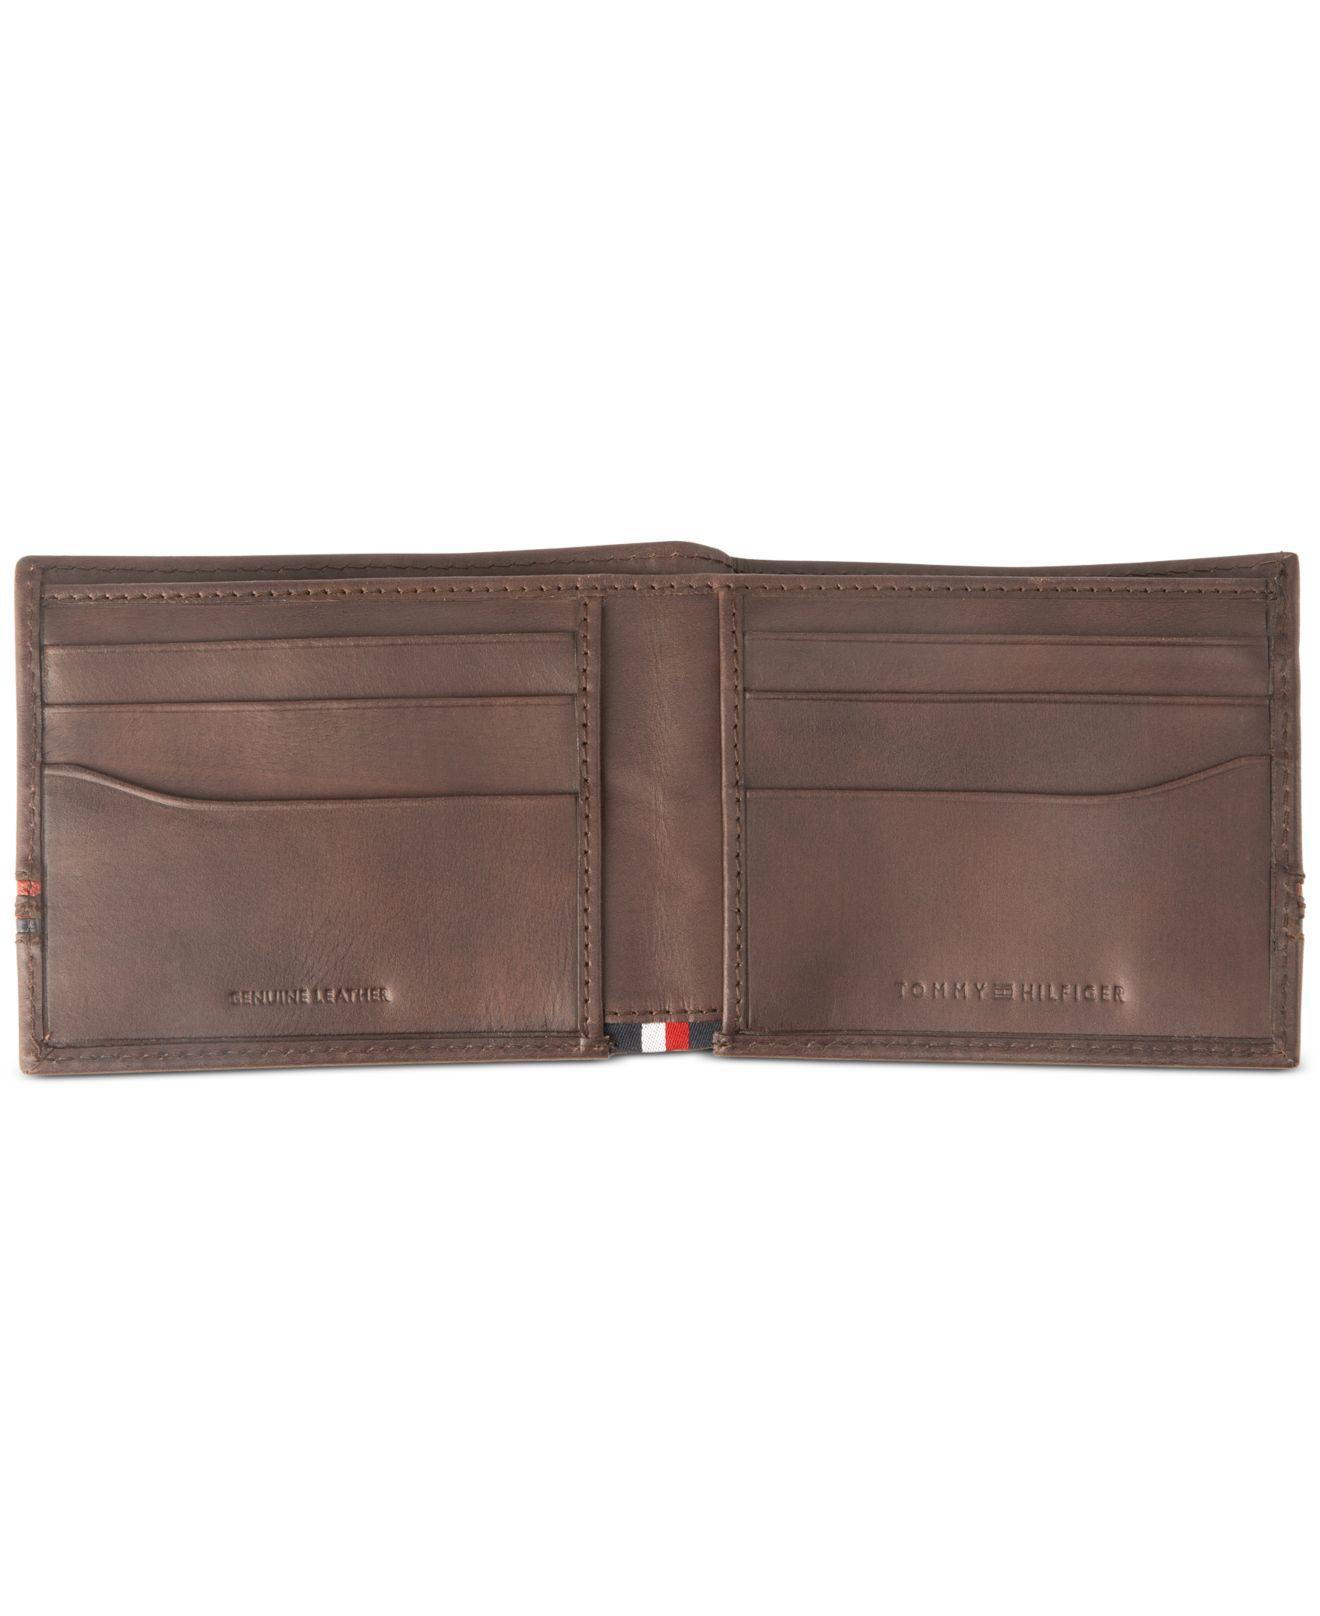 Tommy Hilfiger Leather Rfid Slimfold Wallet in Brown for Men - Lyst